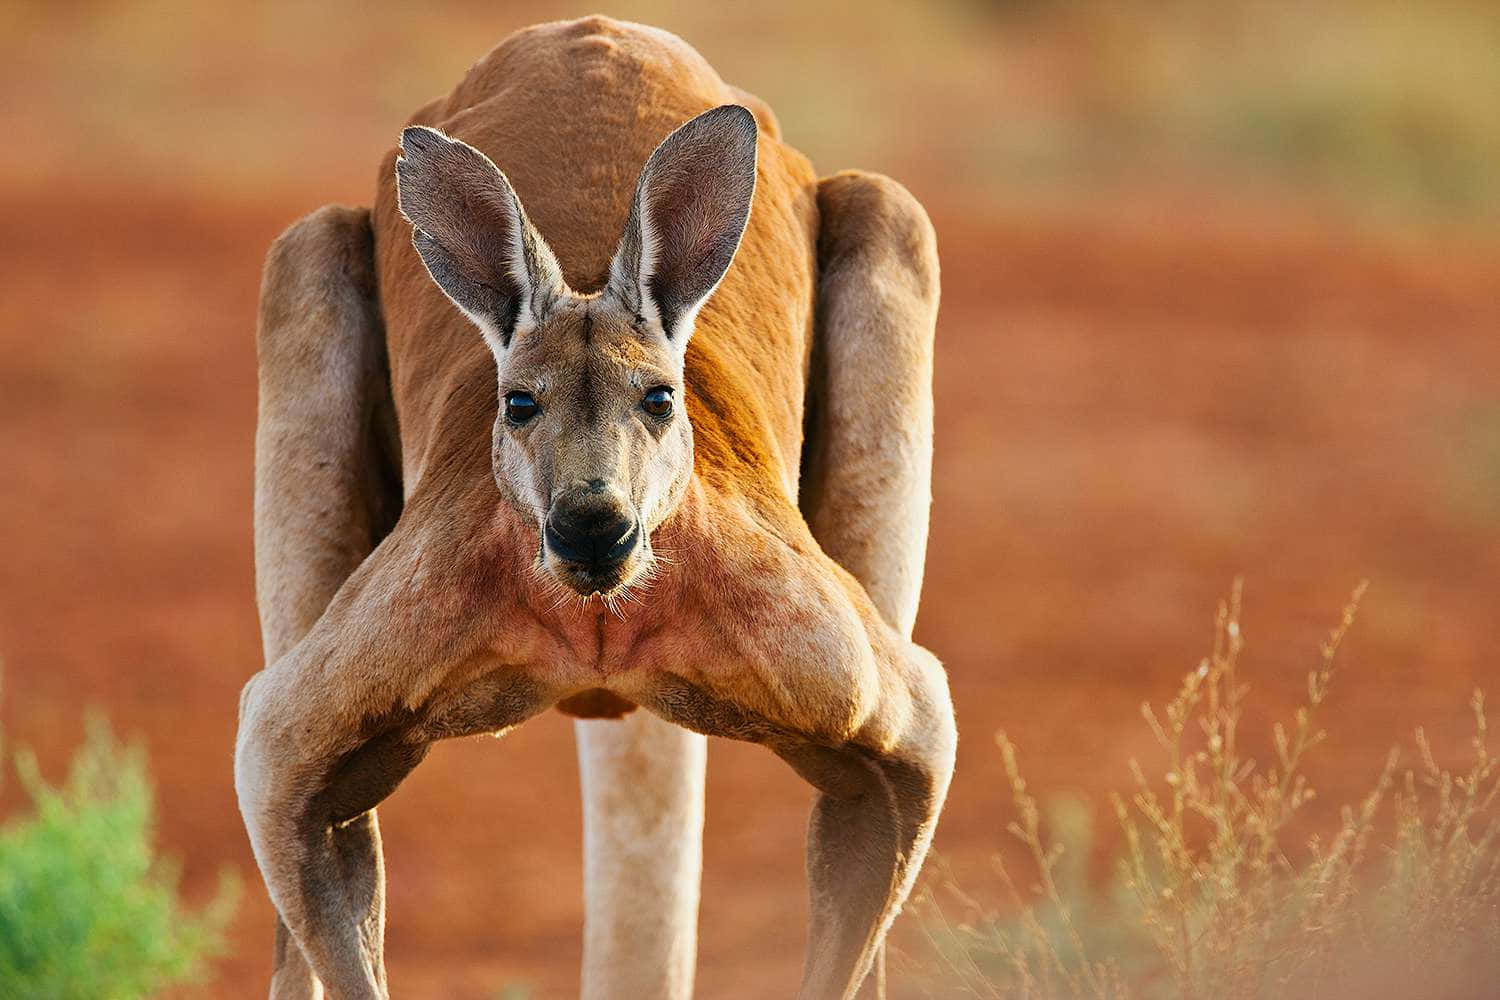 Mother and joey kangaroo enjoying afternoon in Australia.